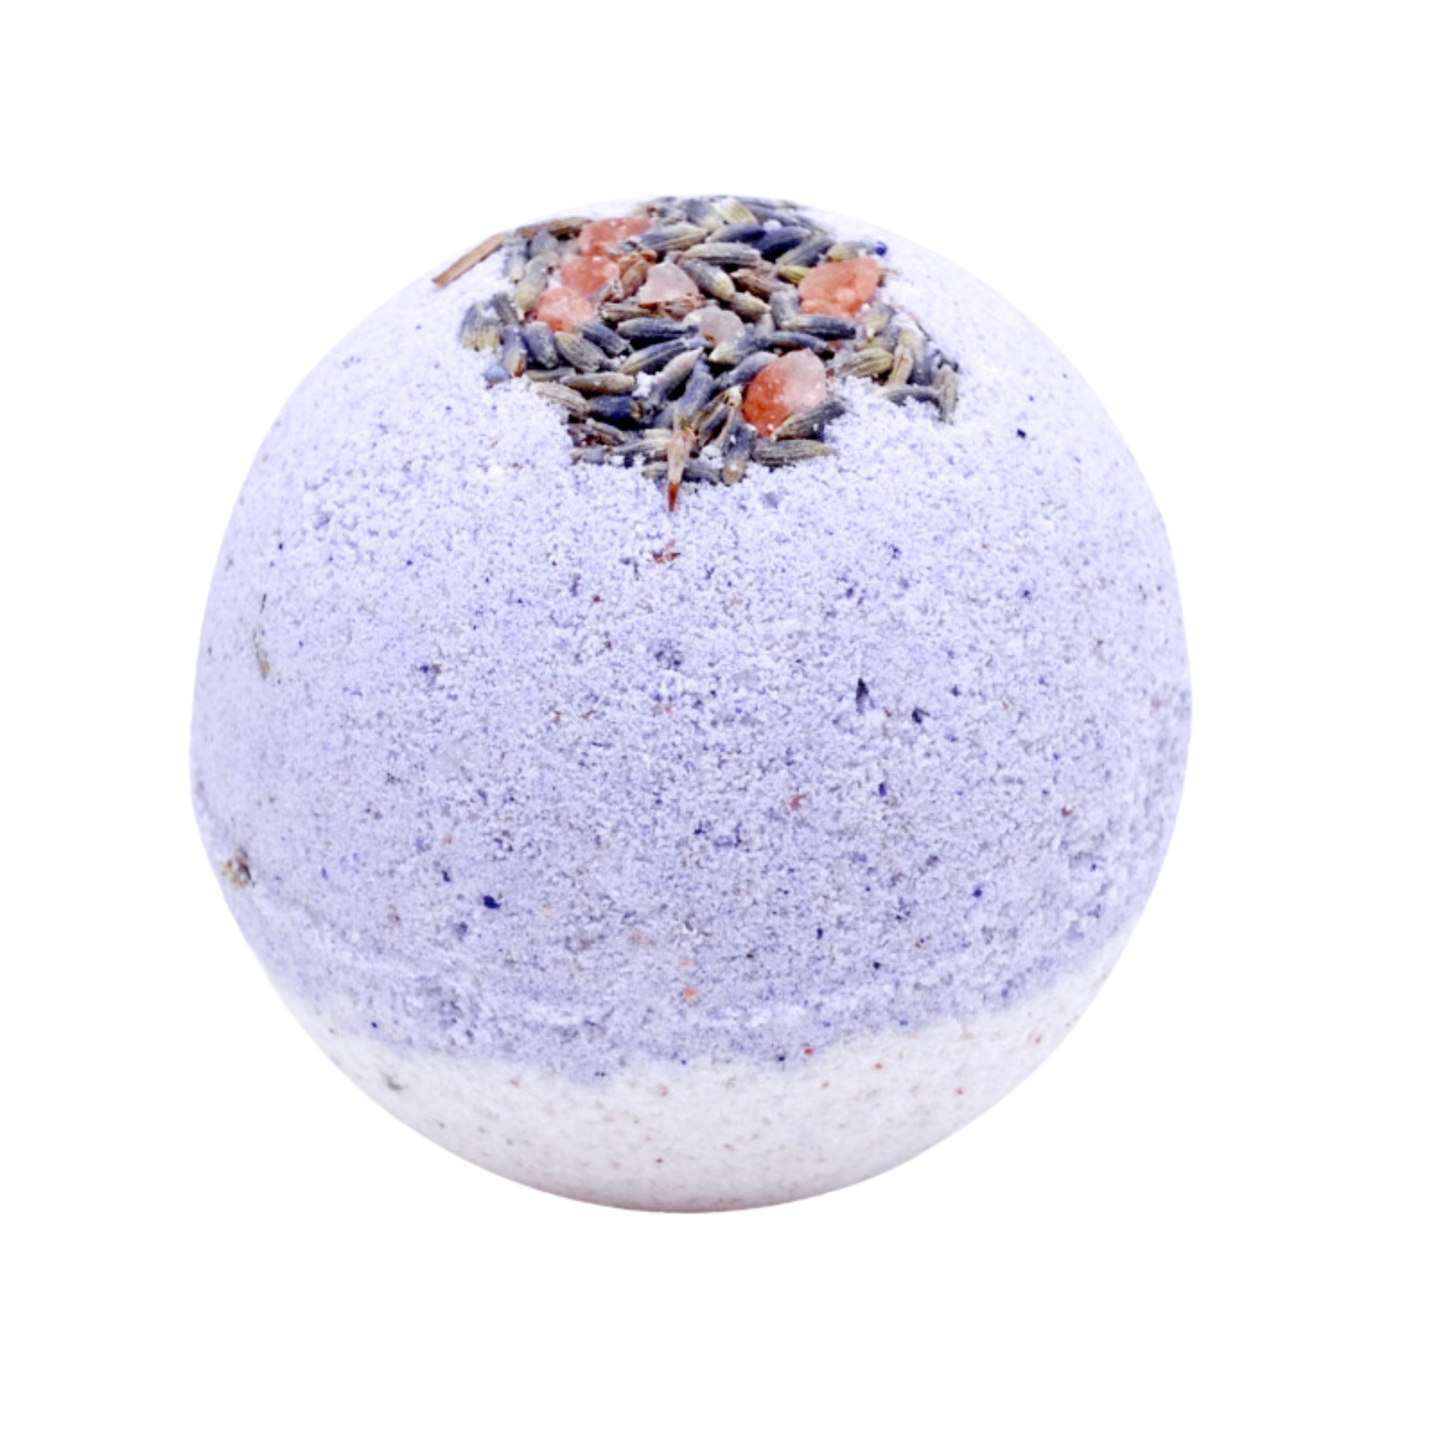 lavender relax bath bomb all natural handmade